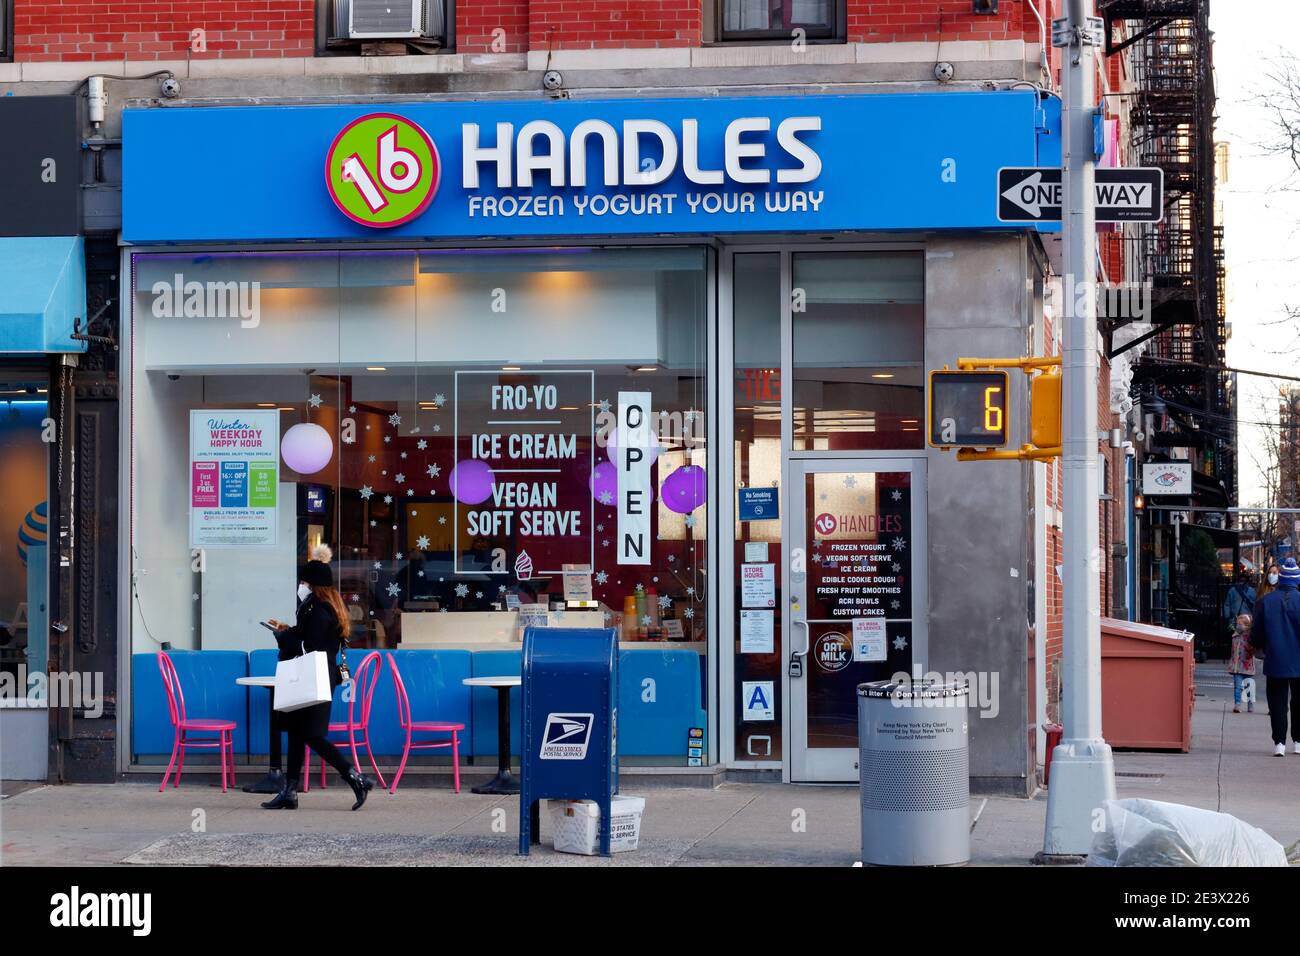 16 Handles, 178 8th Ave, New York, NY. exterior storefront of a frozen yogurt shop in Manhattan's Chelsea neighborhood. Stock Photo